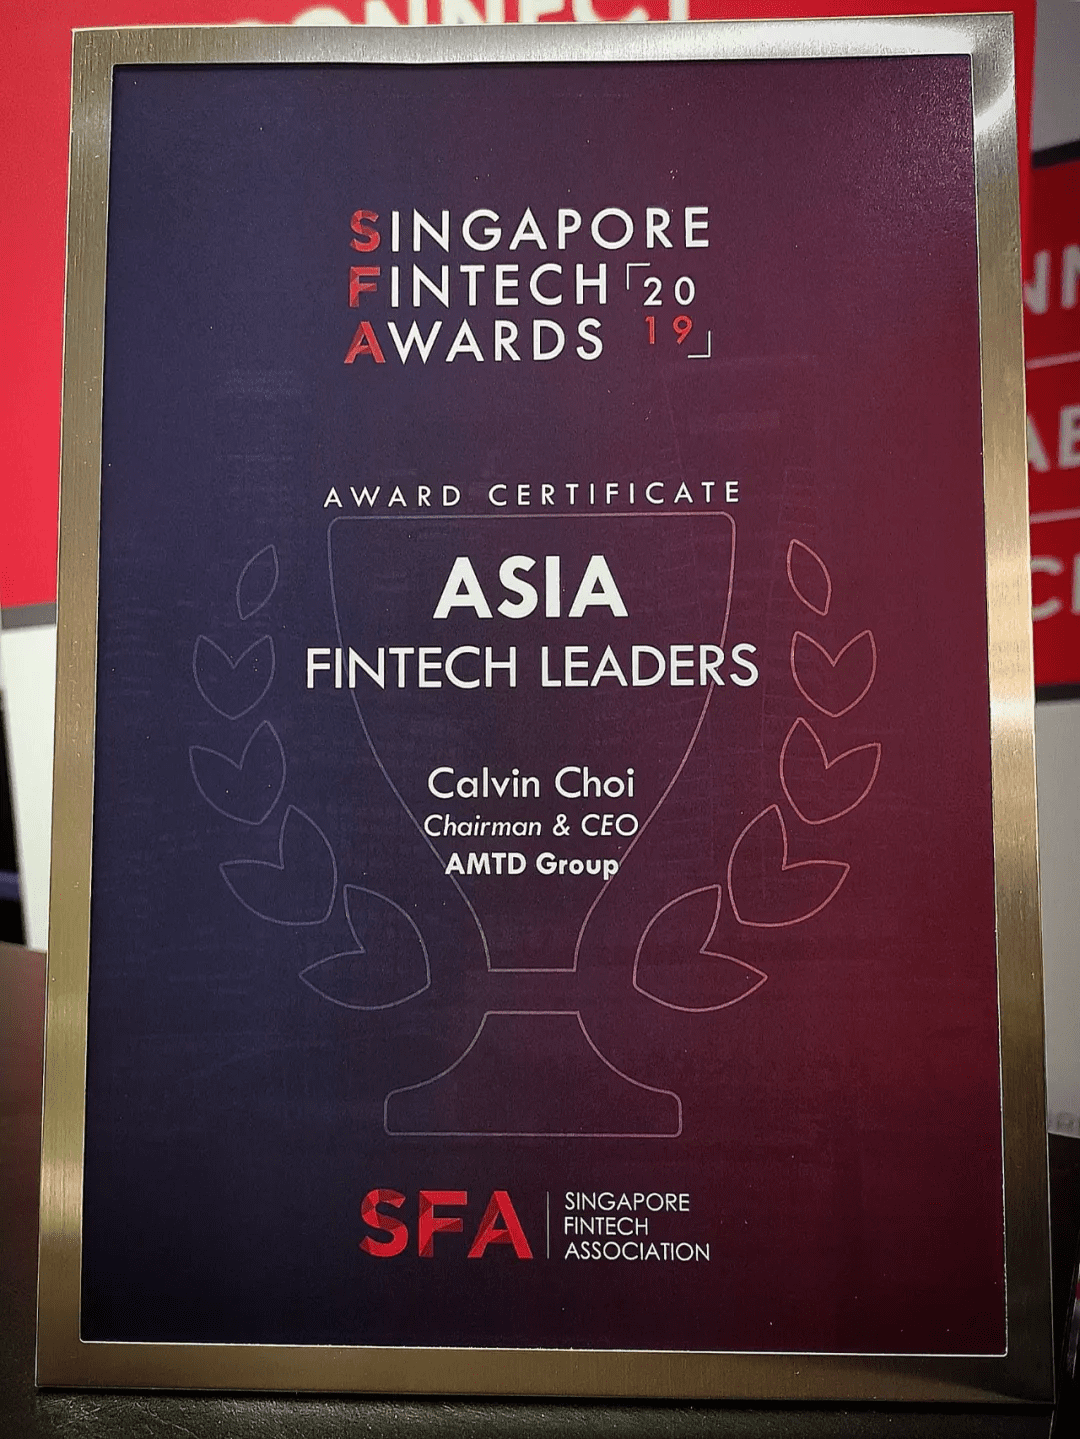 Calvin Choi was awarded Asia Fintech Leader by Singapore Fintech Association